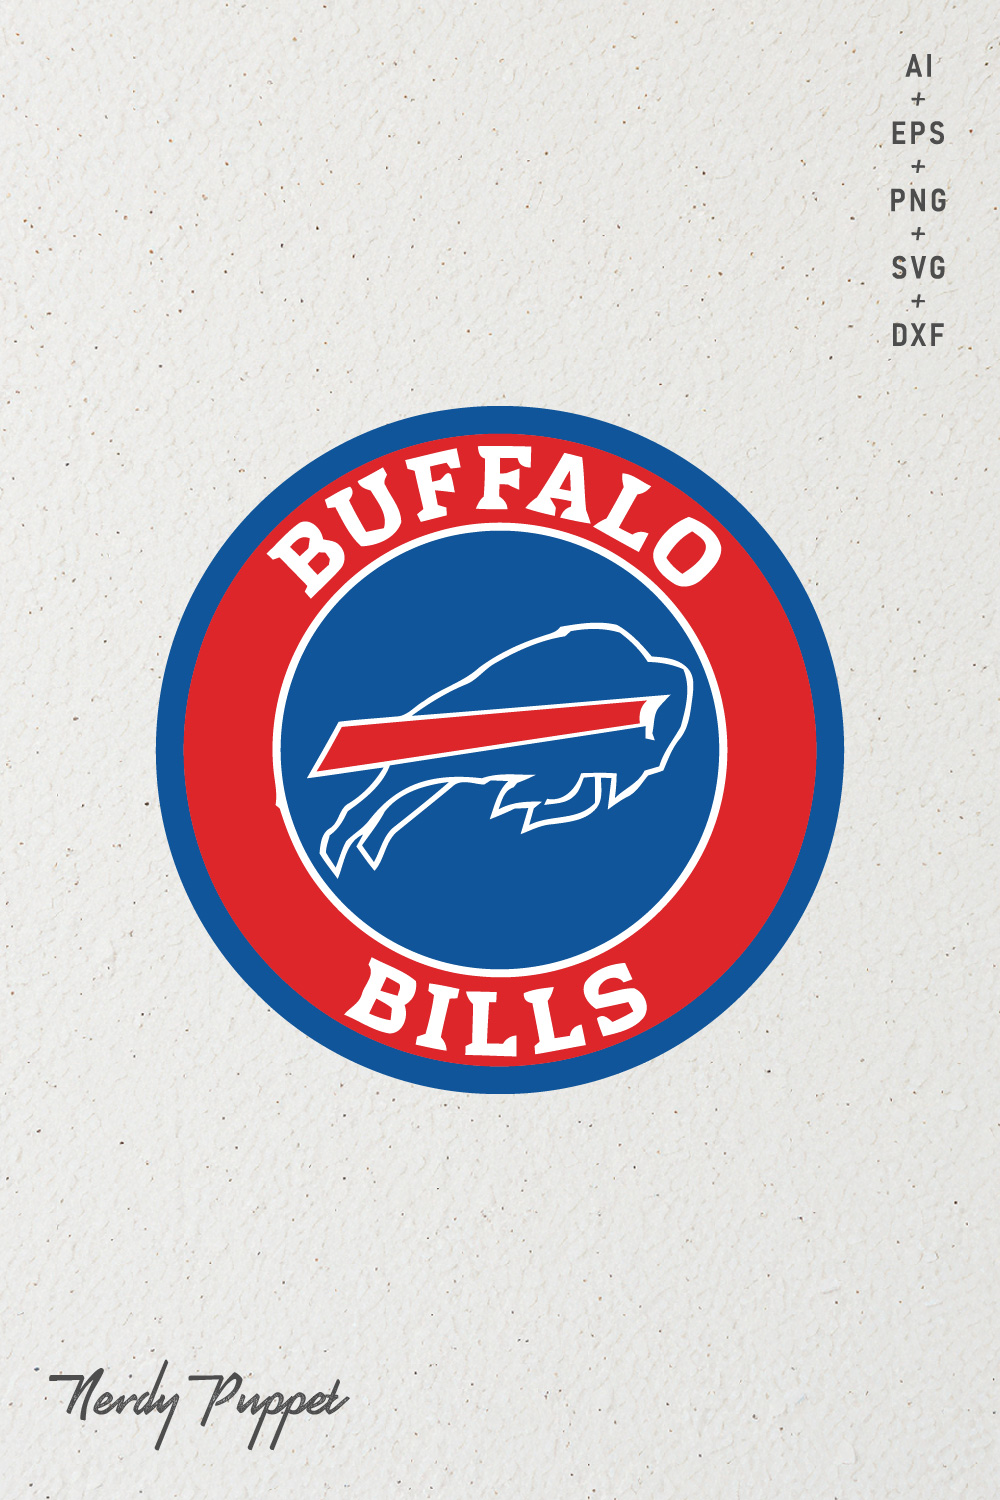 Buffalo Bills pinterest preview image.